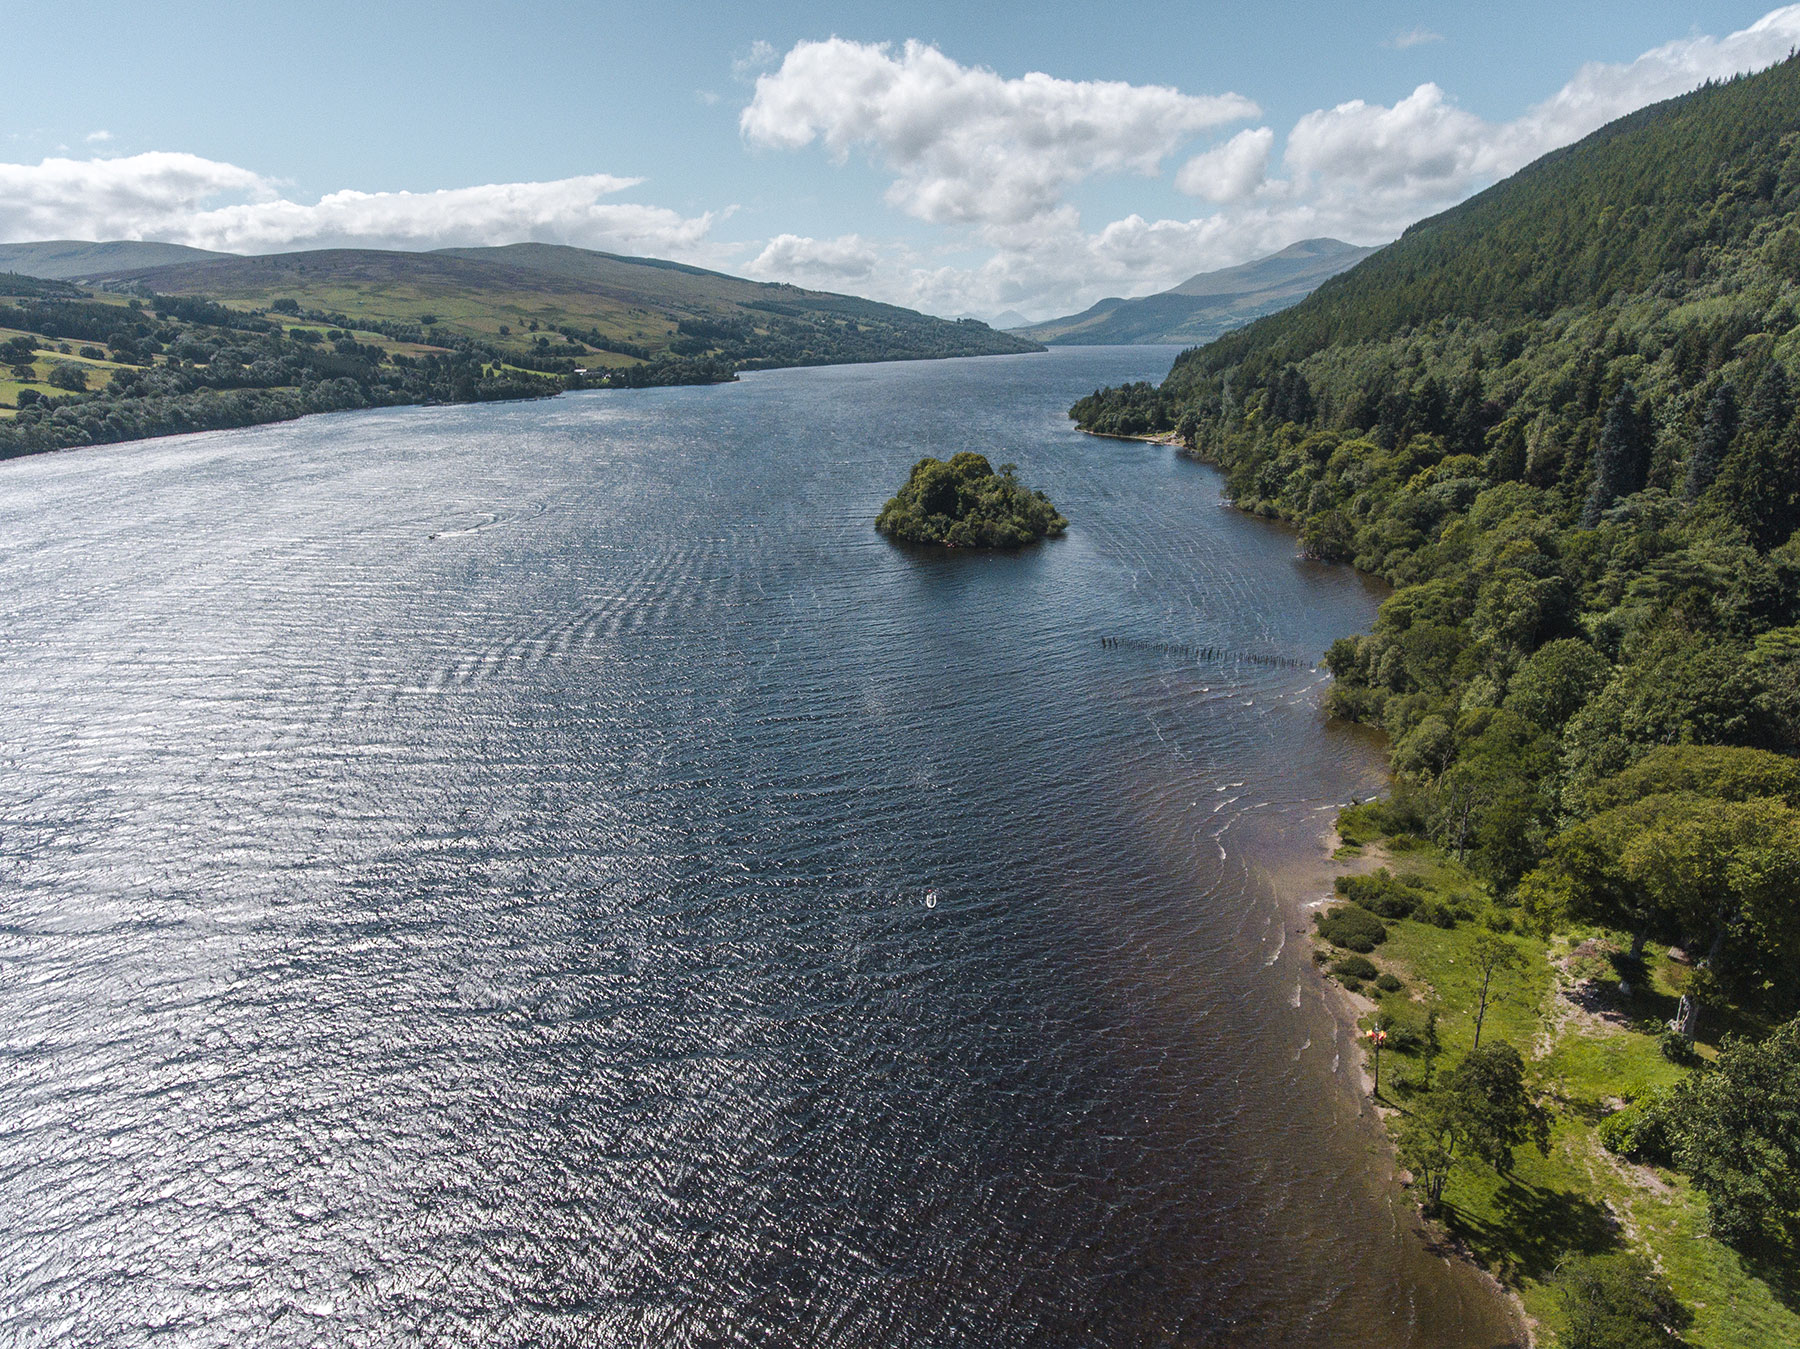 Drone View of Loch Tay, Scotland